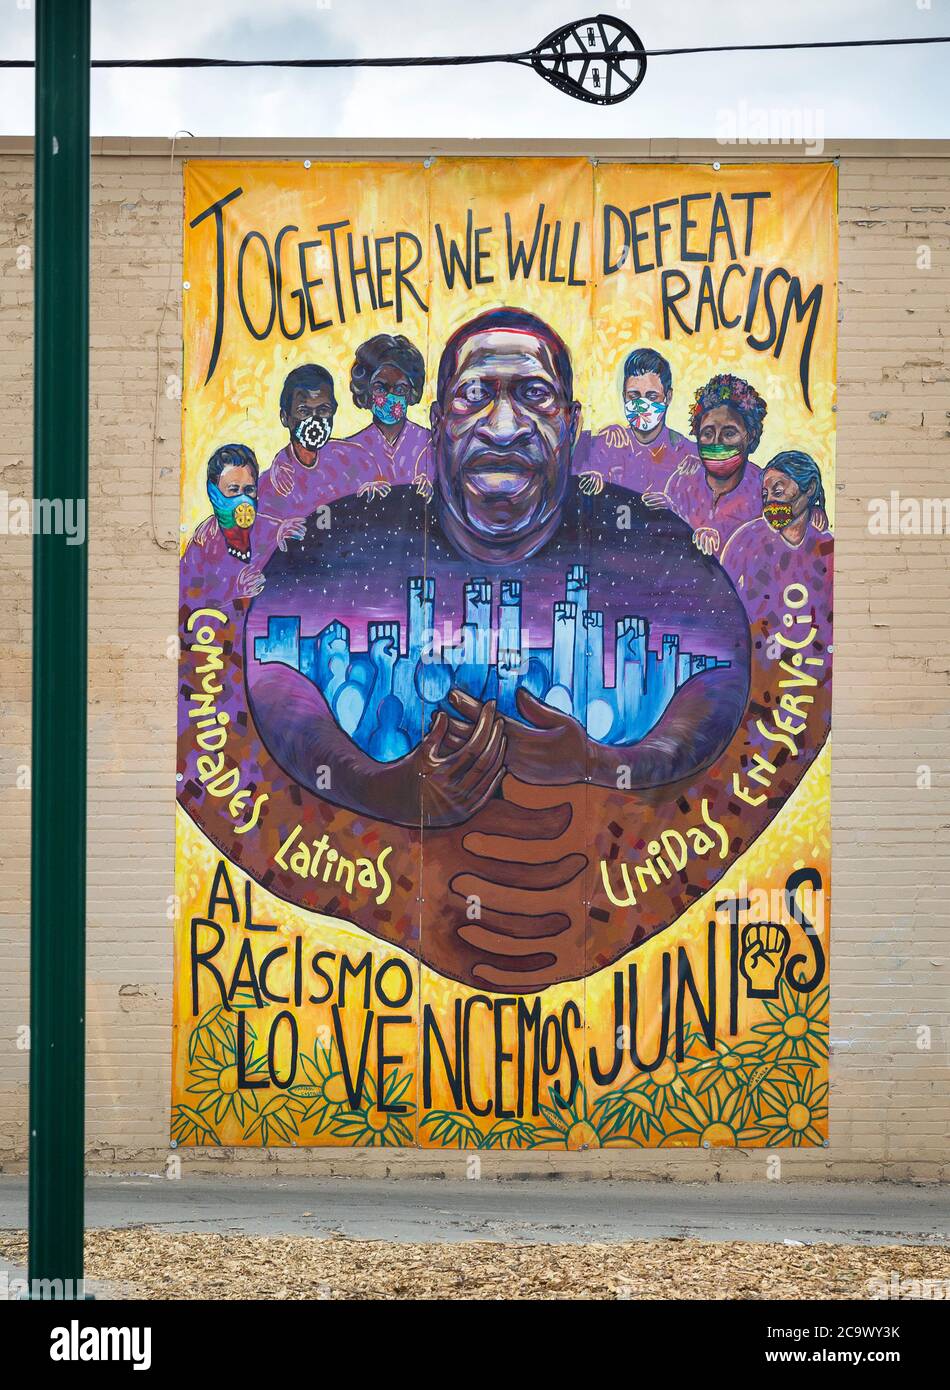 Mural with a portrait of George Floyd  and slogans Together We Will Defeat Racism, Al Racismo Lo Vencemos Juntis, Comunidades Latinas Unidas En Servic Stock Photo